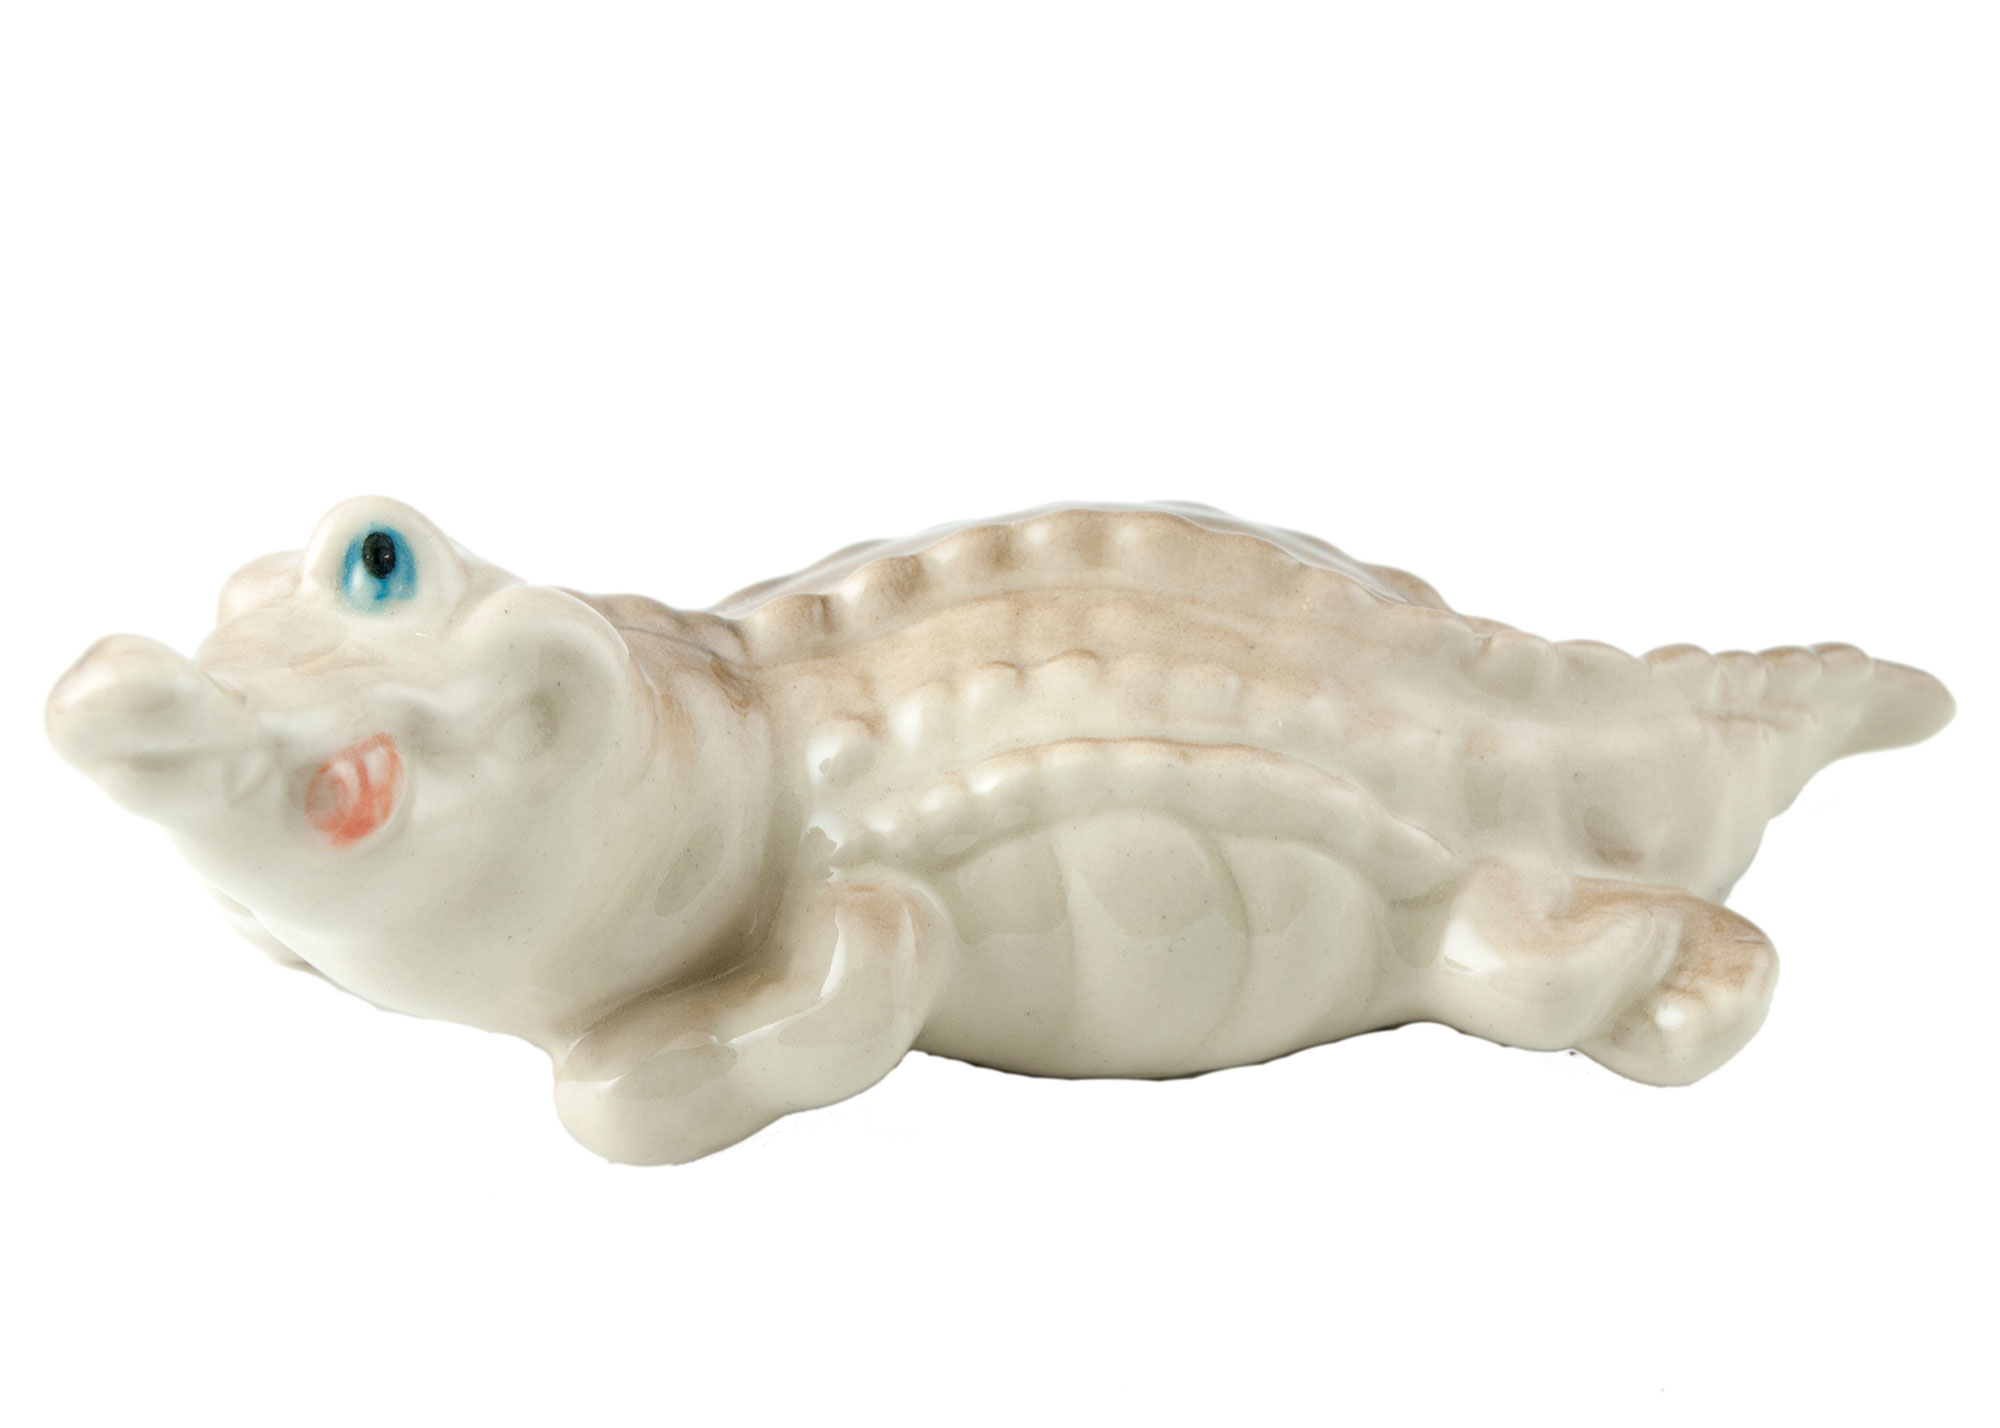 Buy Crocodile Porcelain Figurine at GoldenCockerel.com